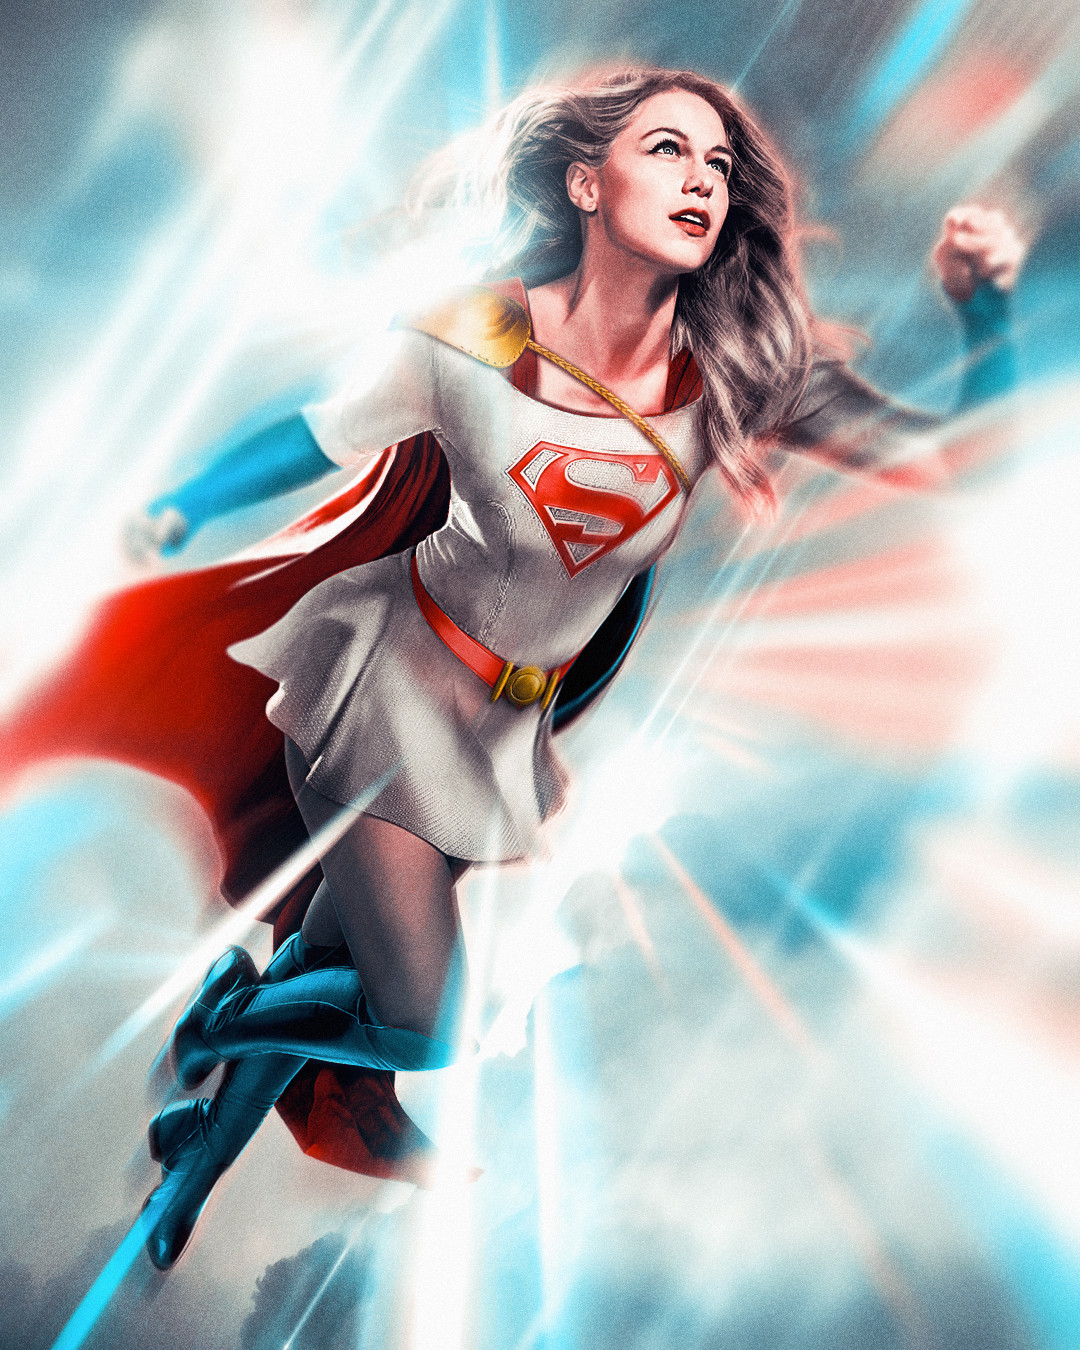 Power girl as supergirl